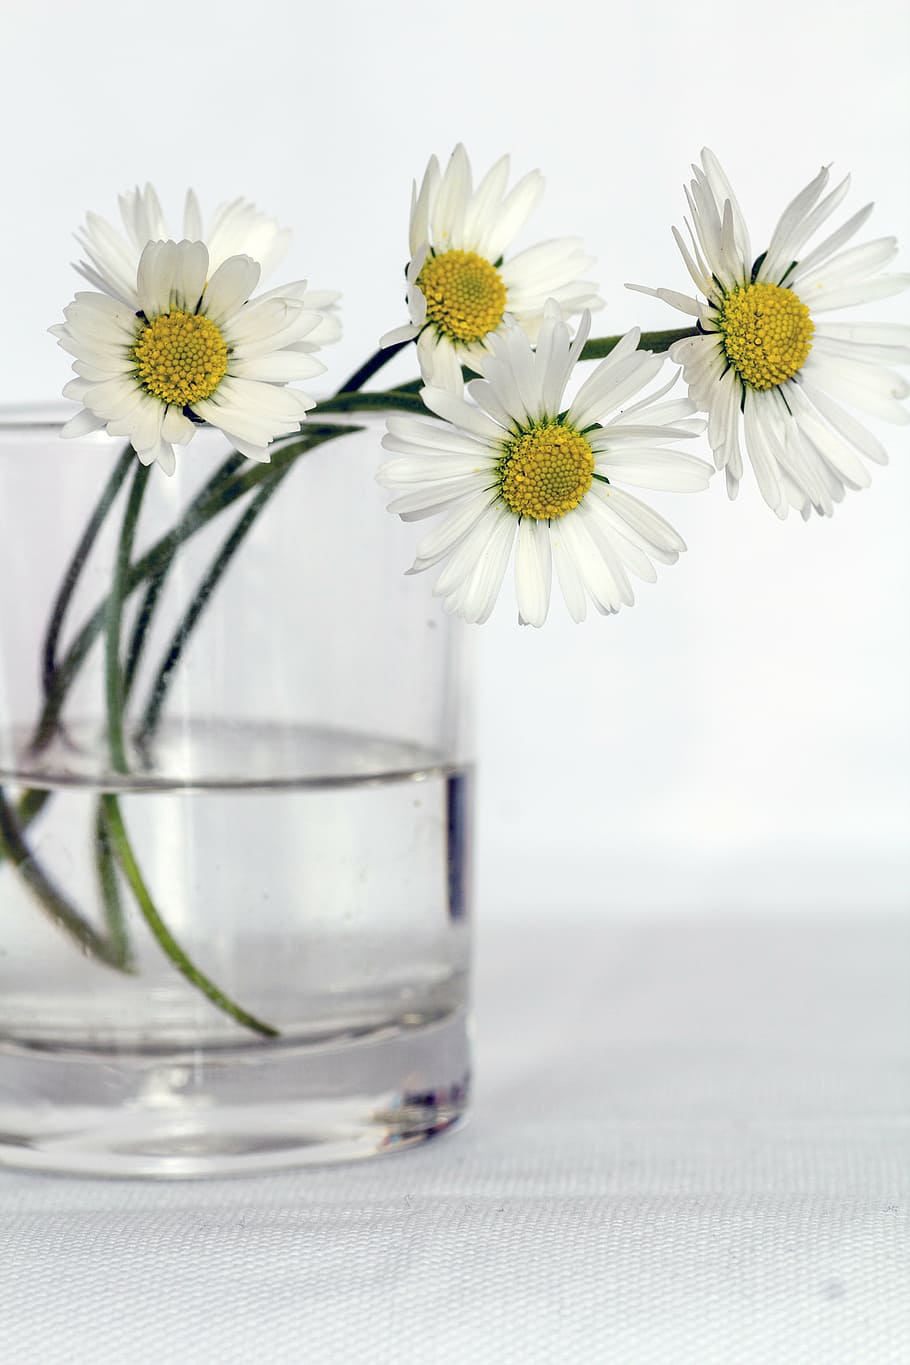 daisy flower, glass vase, flowers, still life, daisy, flower vase, close, flower, vase, flower head